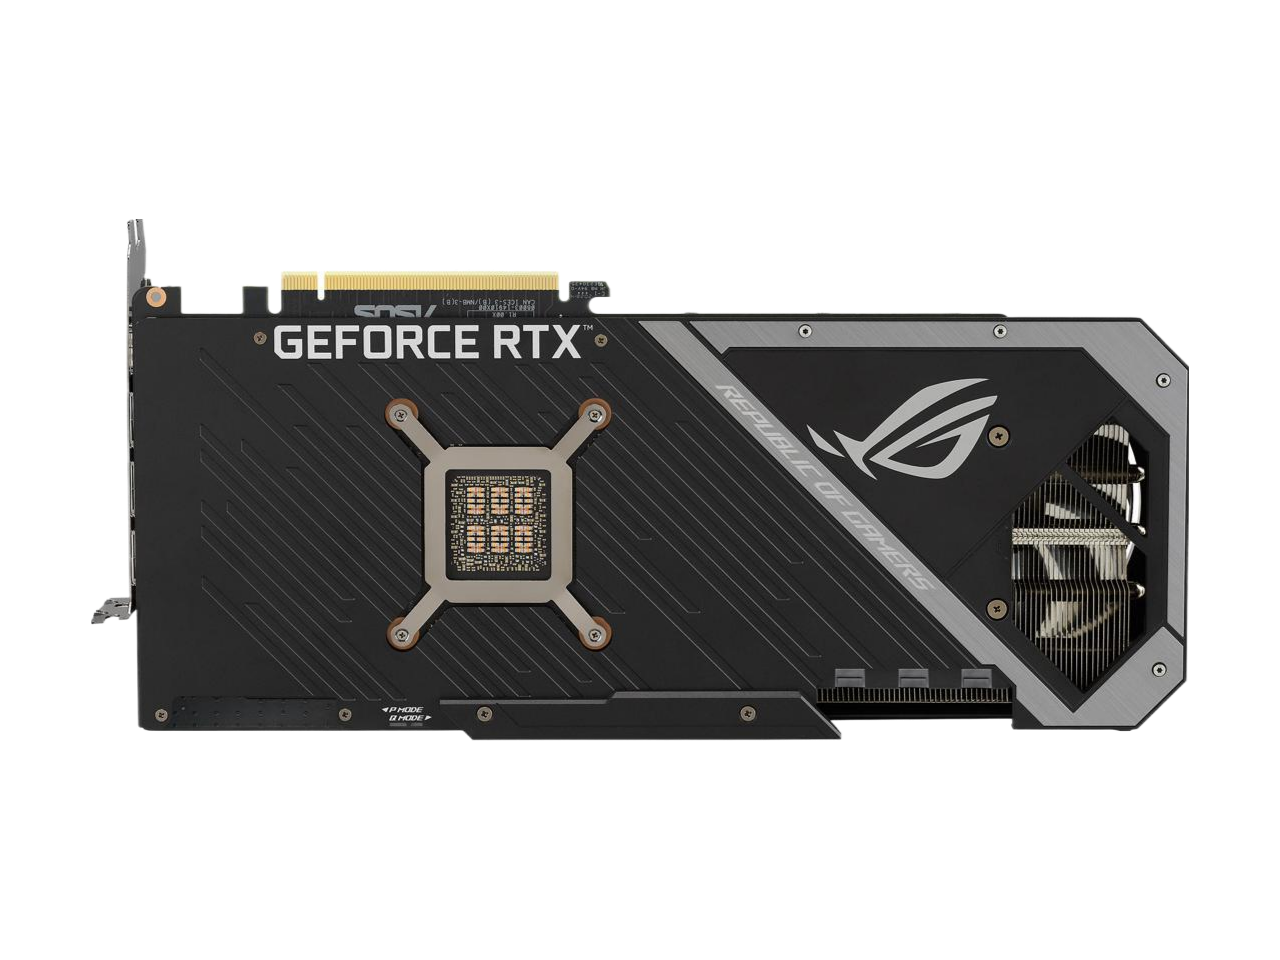 ASUS ROG Strix GeForce RTX 3080 V2 OC Edition 10GB GDDR6X PCI